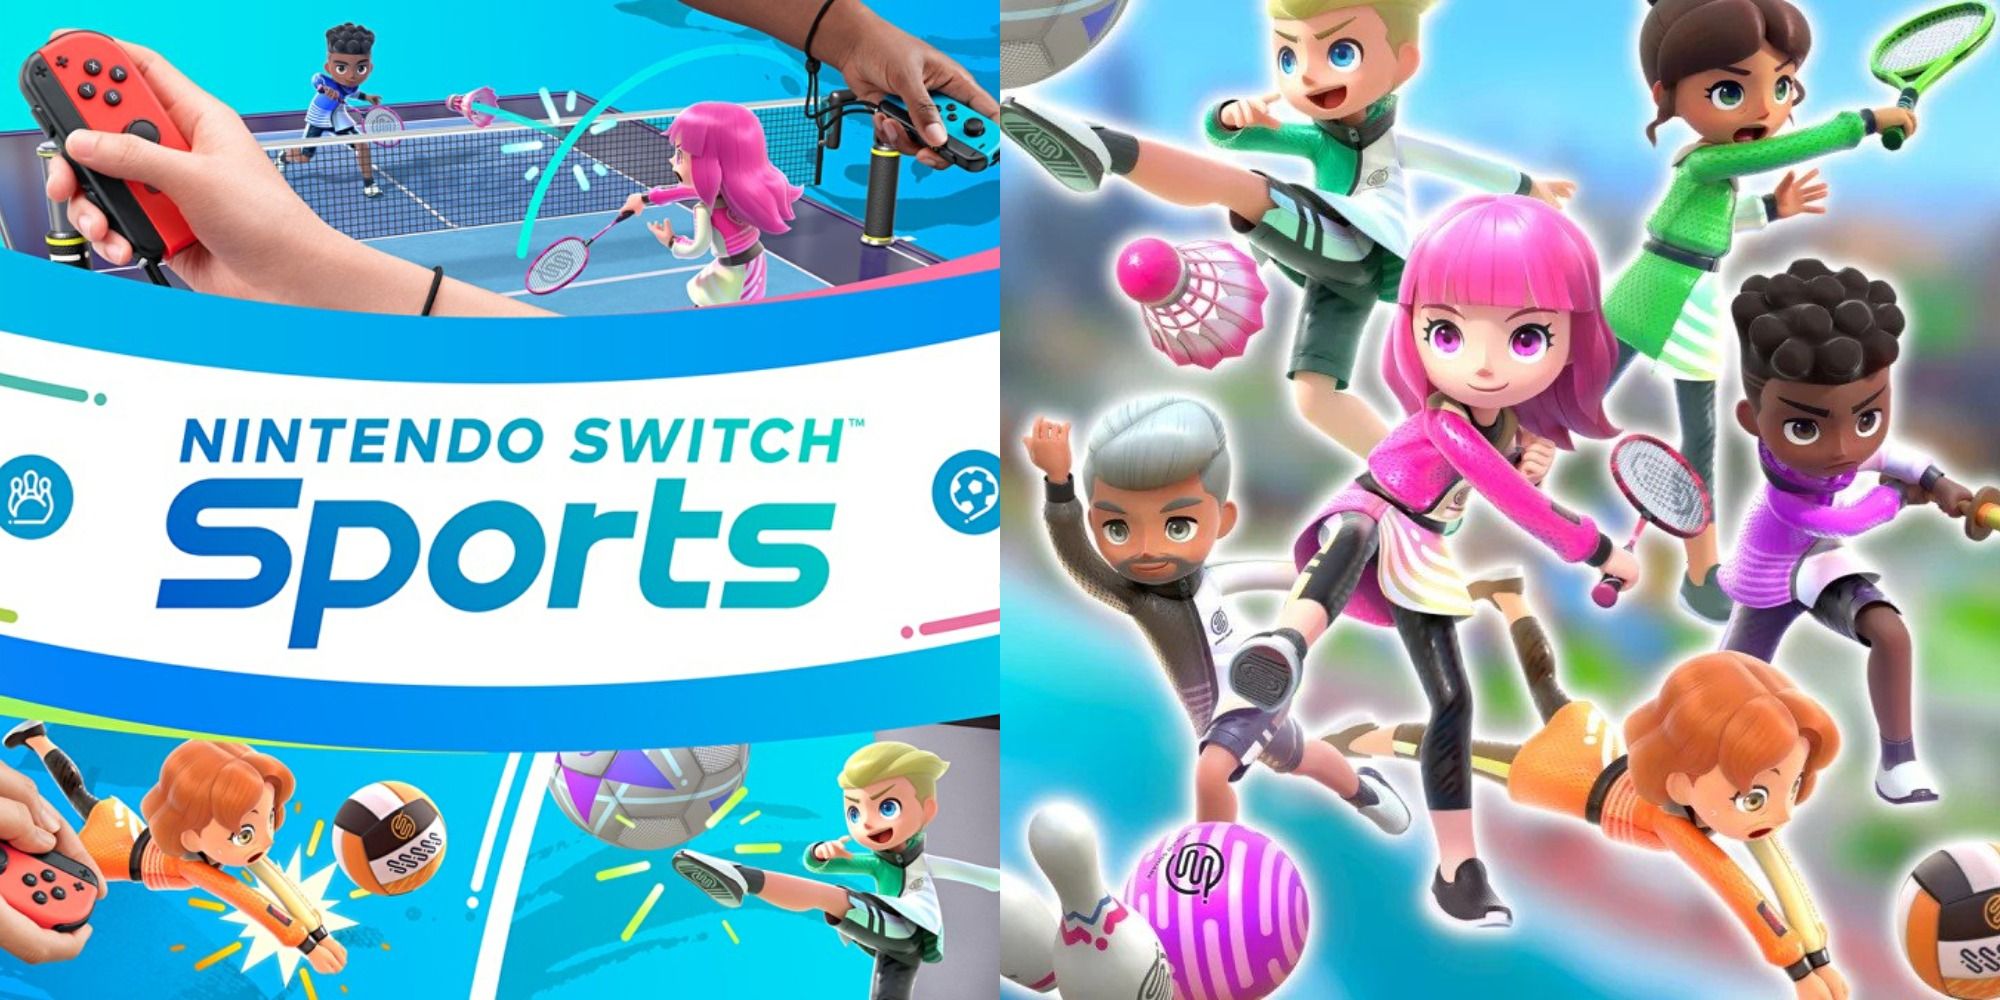 Nintendo Switch Sports update to add Football Leg Strap support